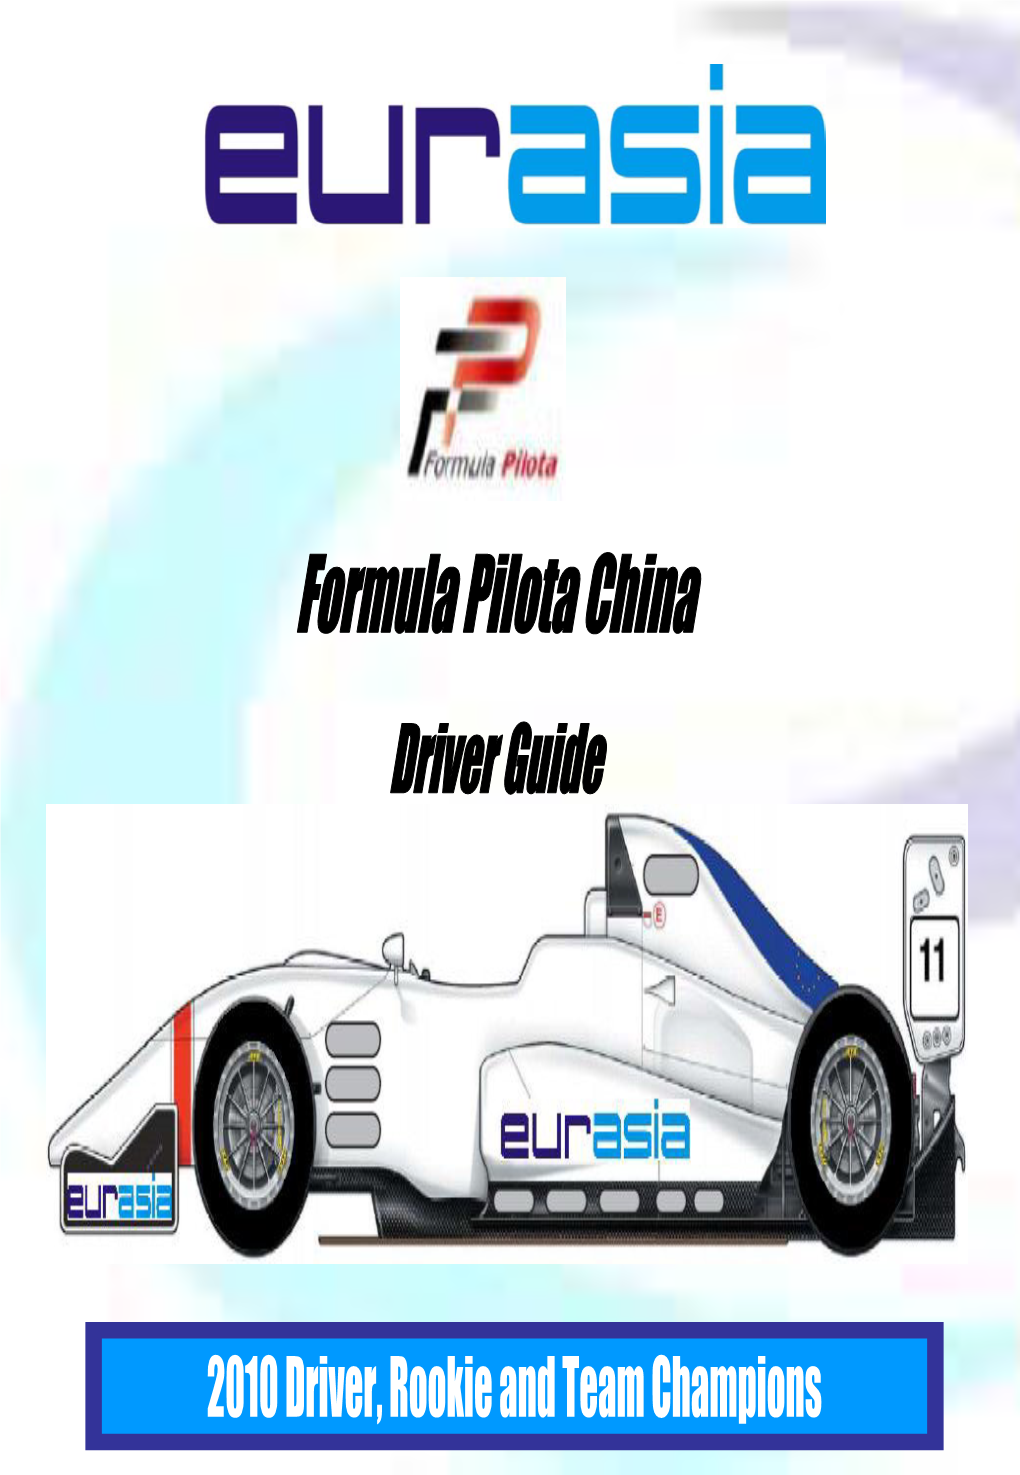 Formula Pilota China Team